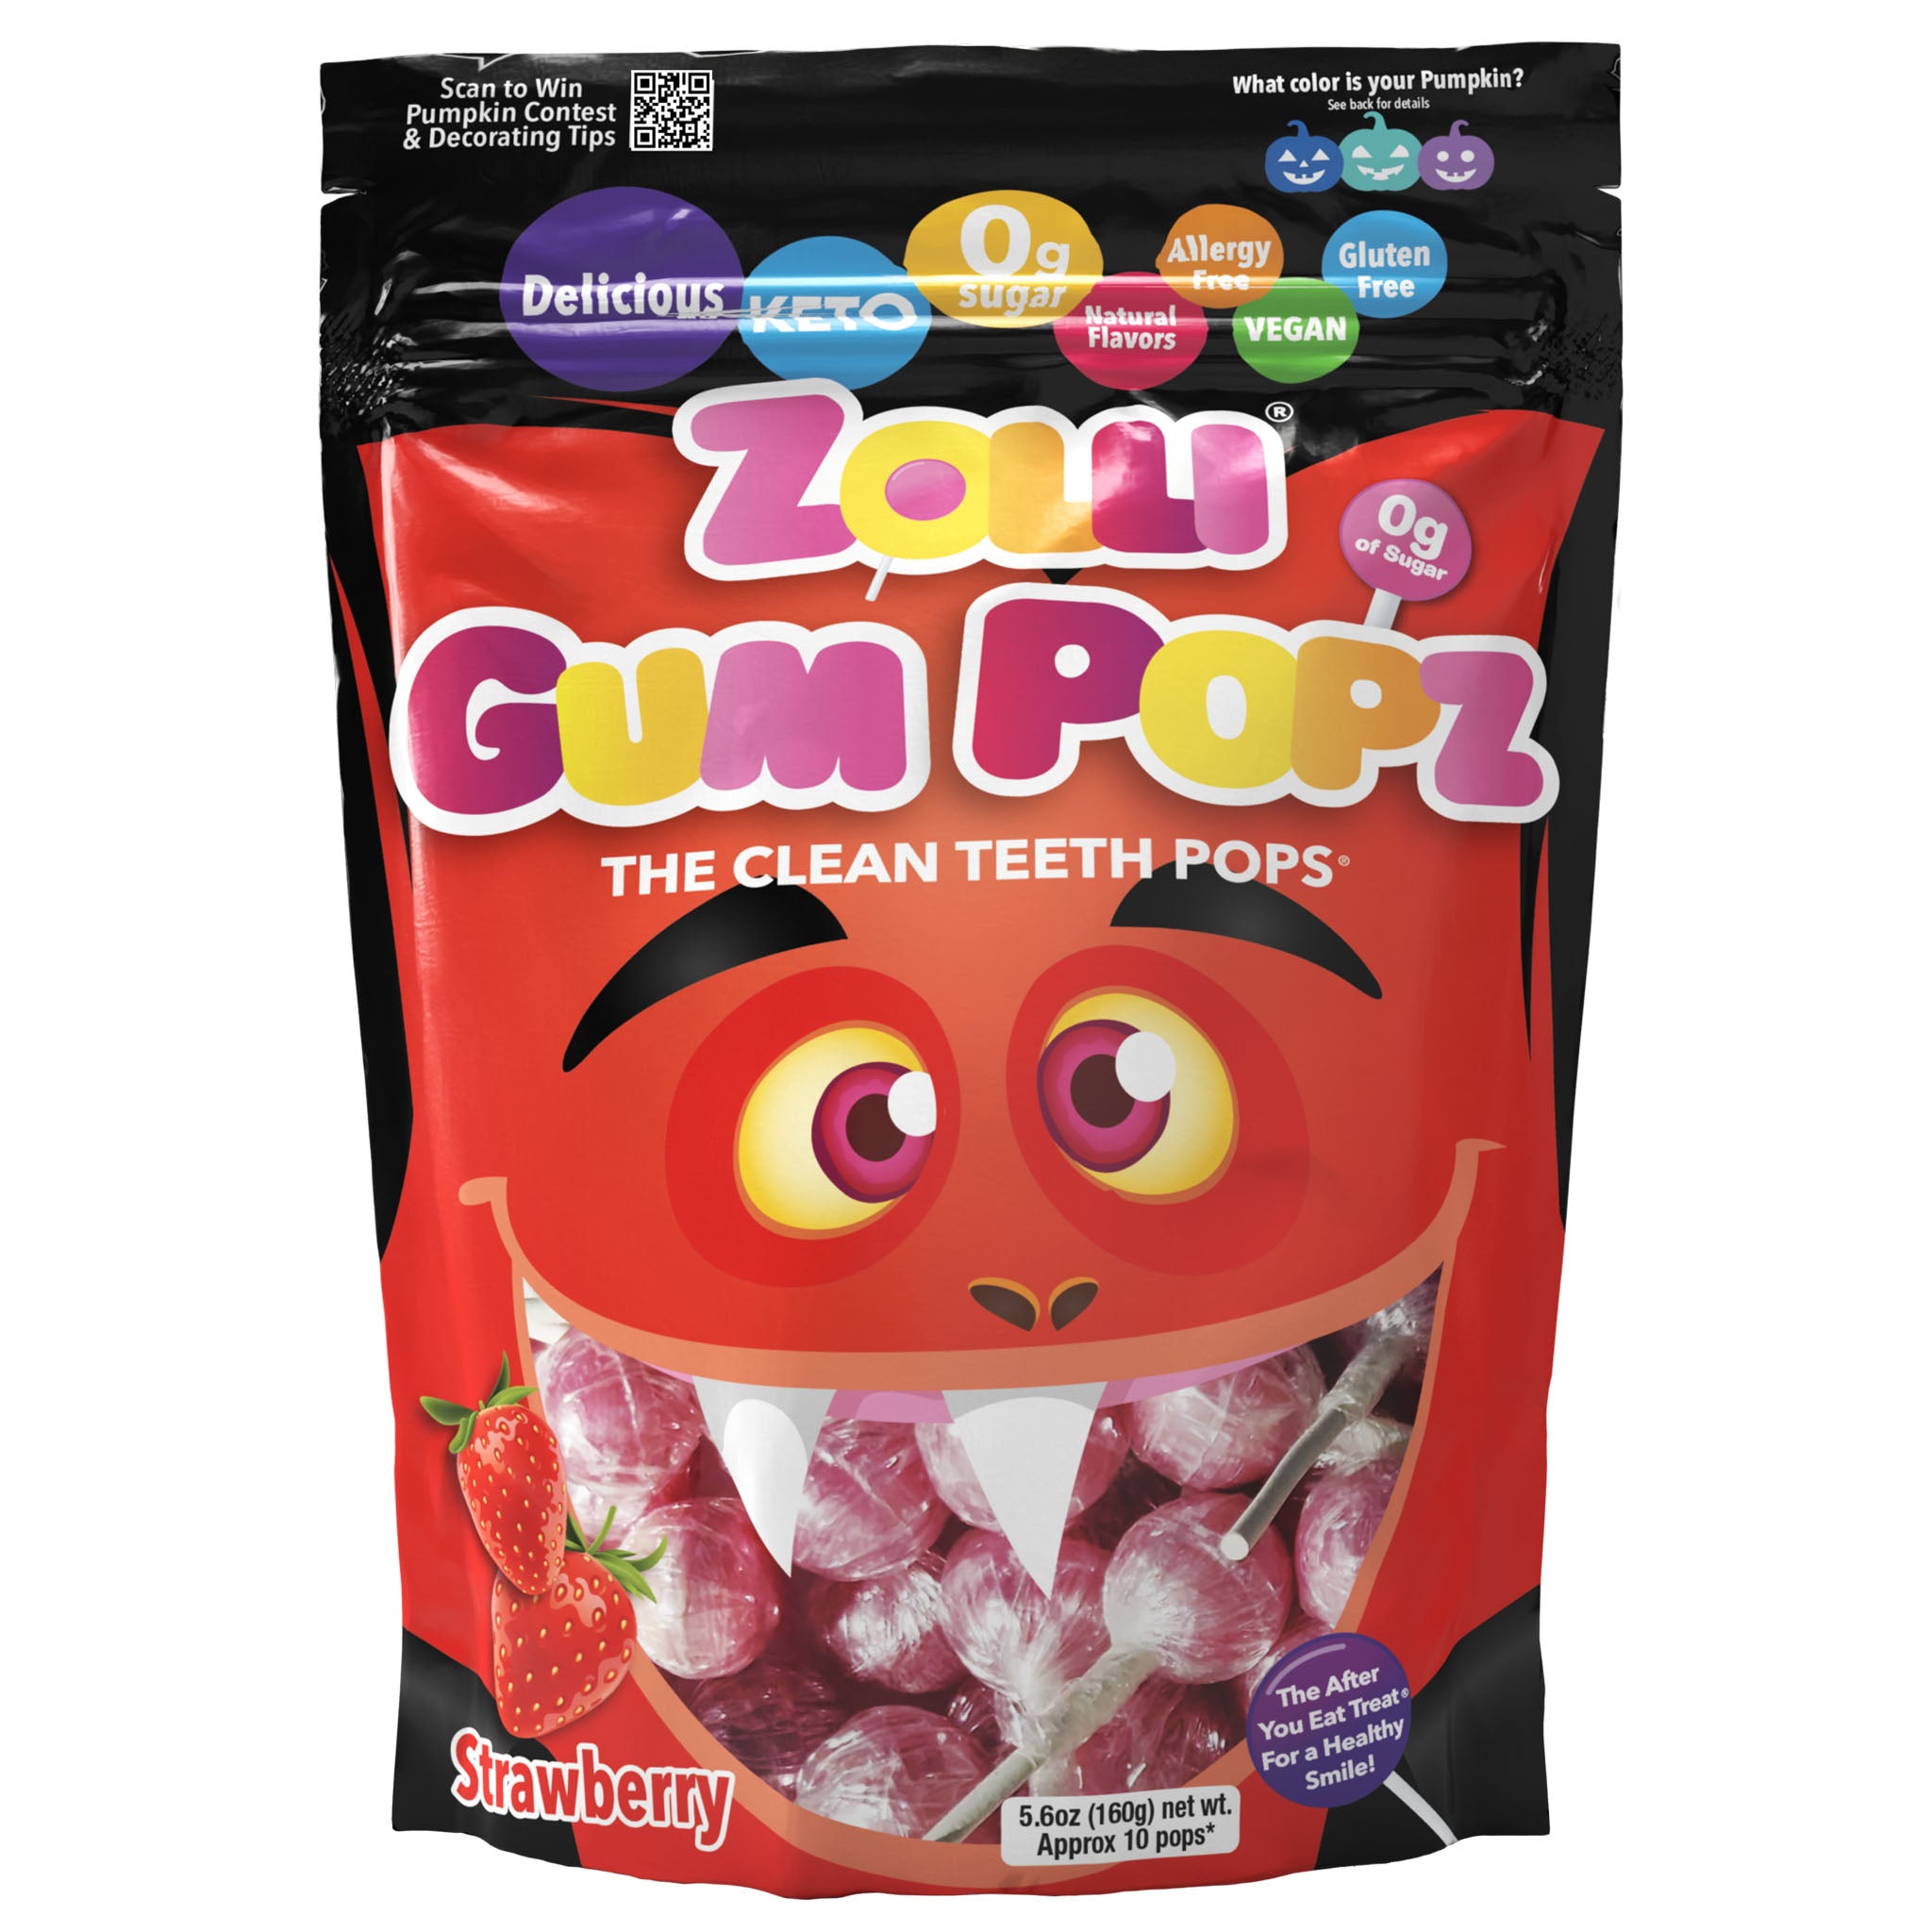 Zolli Gum Pops 5.6oz pack in Strawberry flavor.